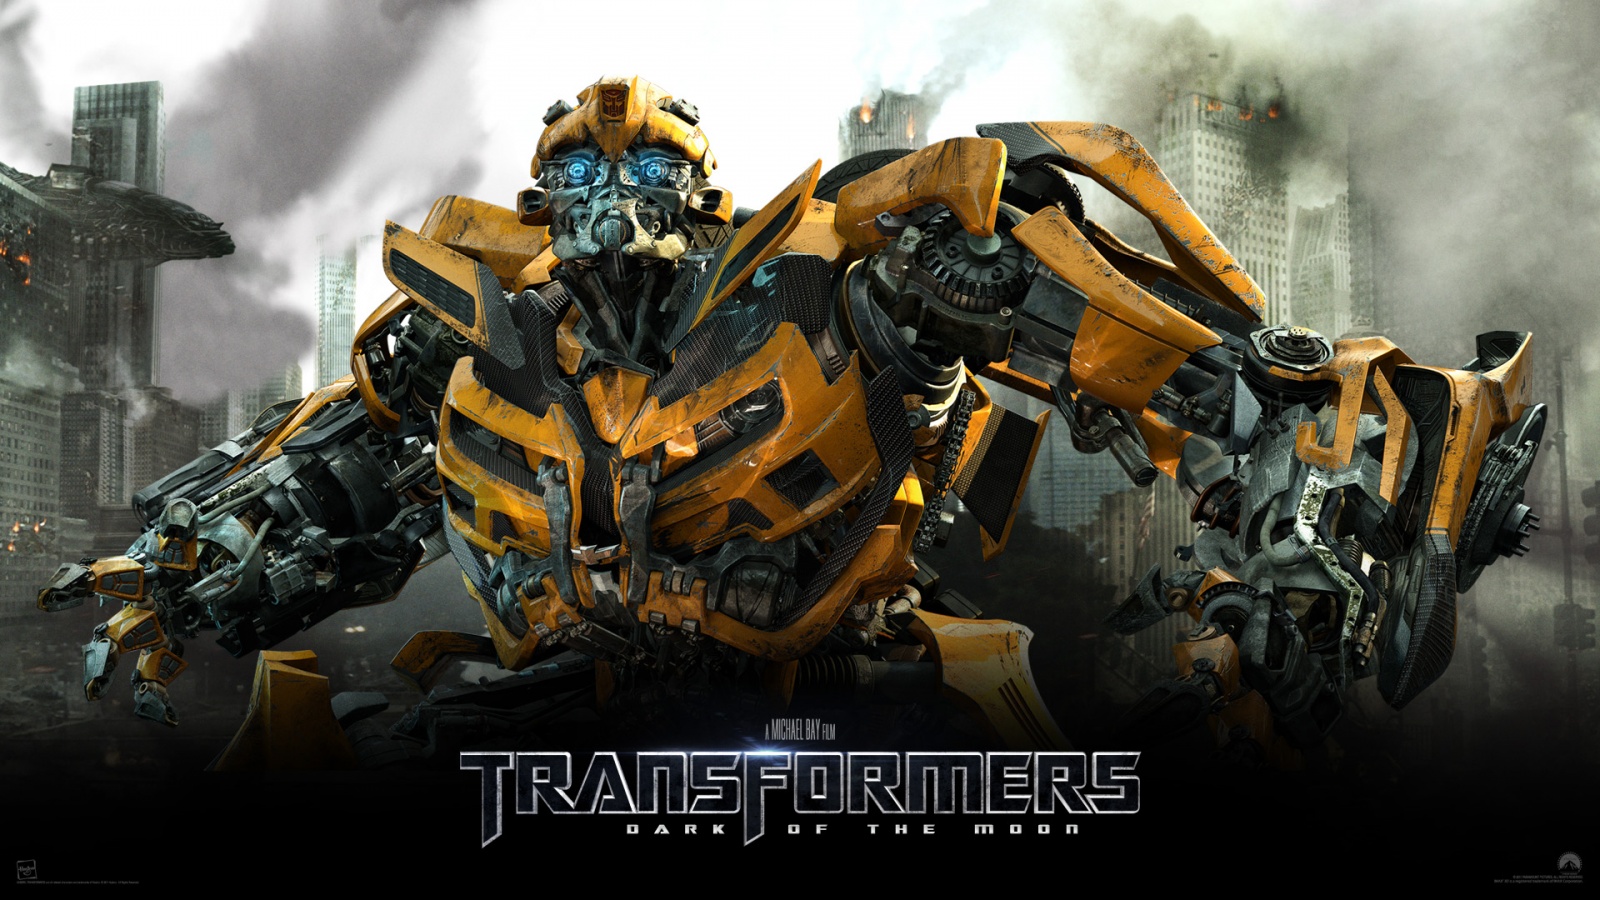 Bumblebee Transformers Dark of The Moon Wallpapers in jpg format